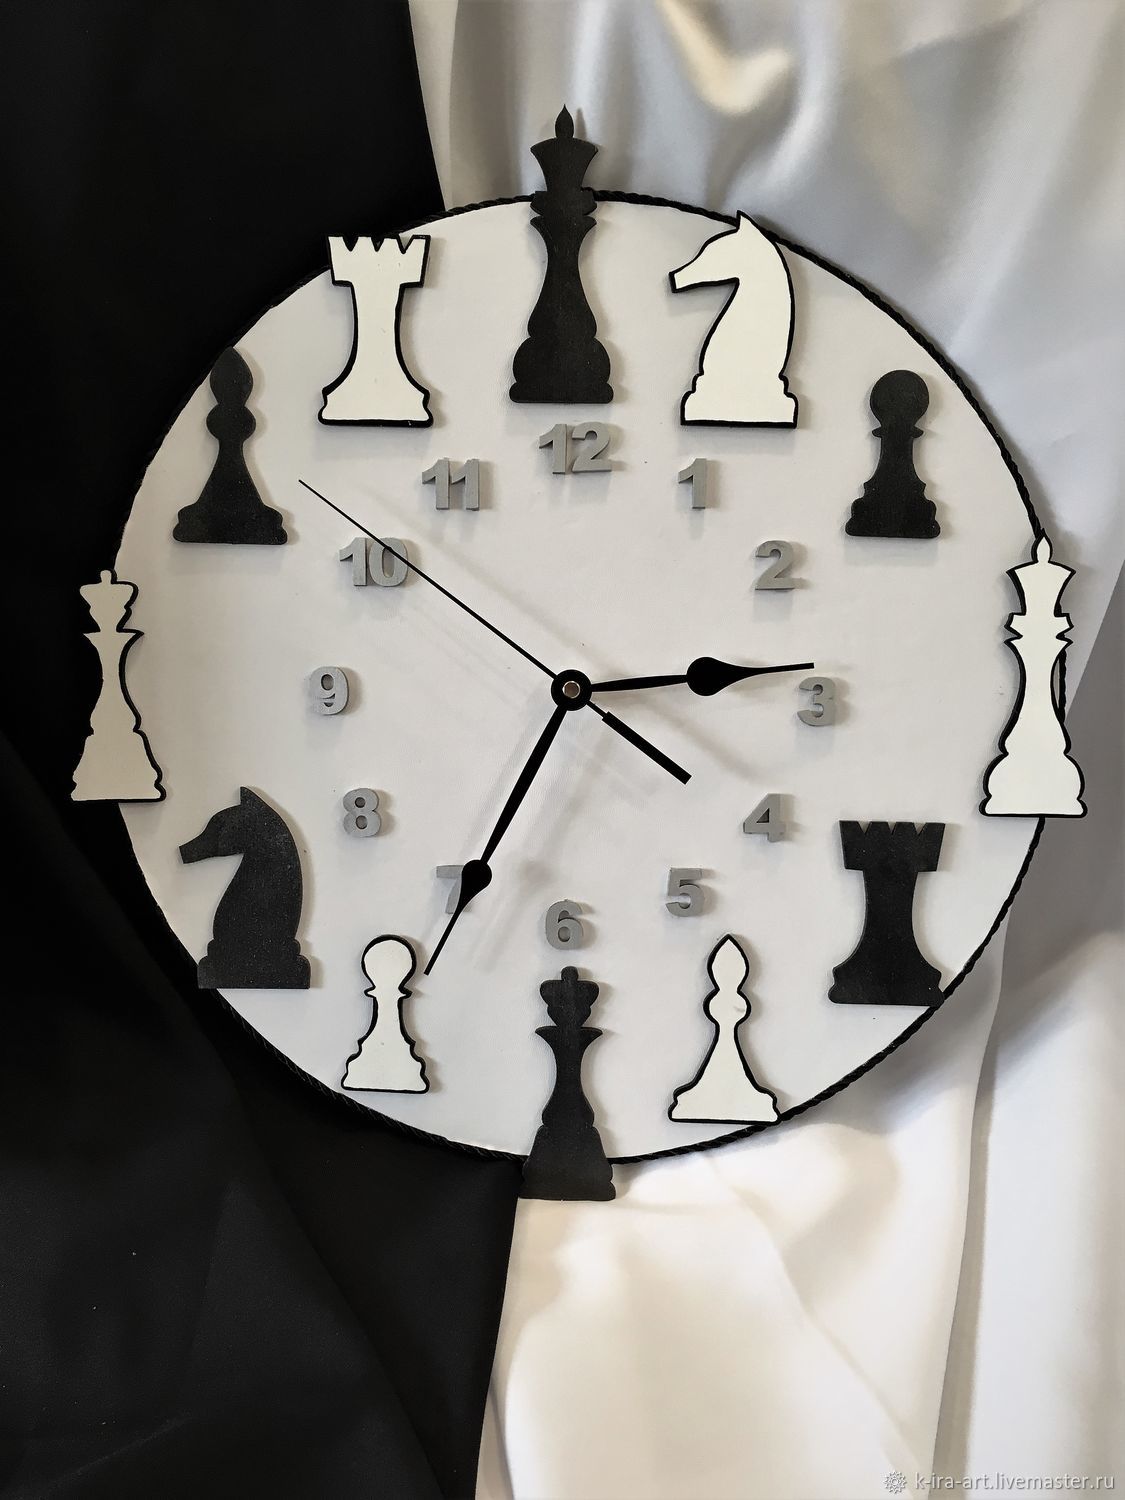 24 Hour Chess